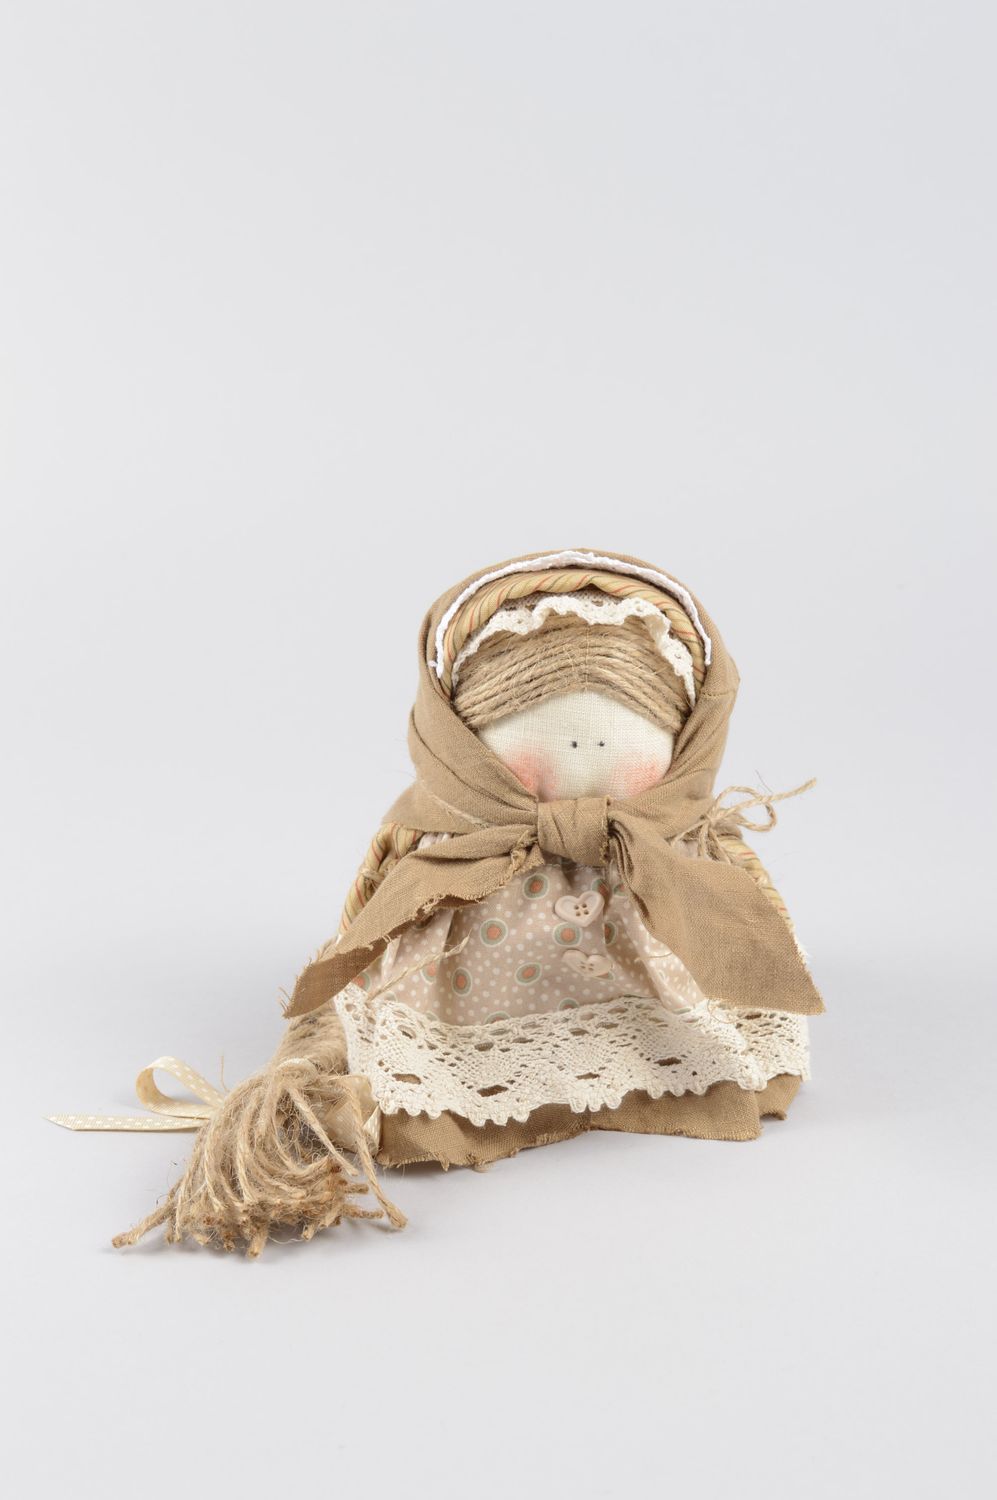 Handmade doll decorative use only unusual doll for children nursery decor photo 1